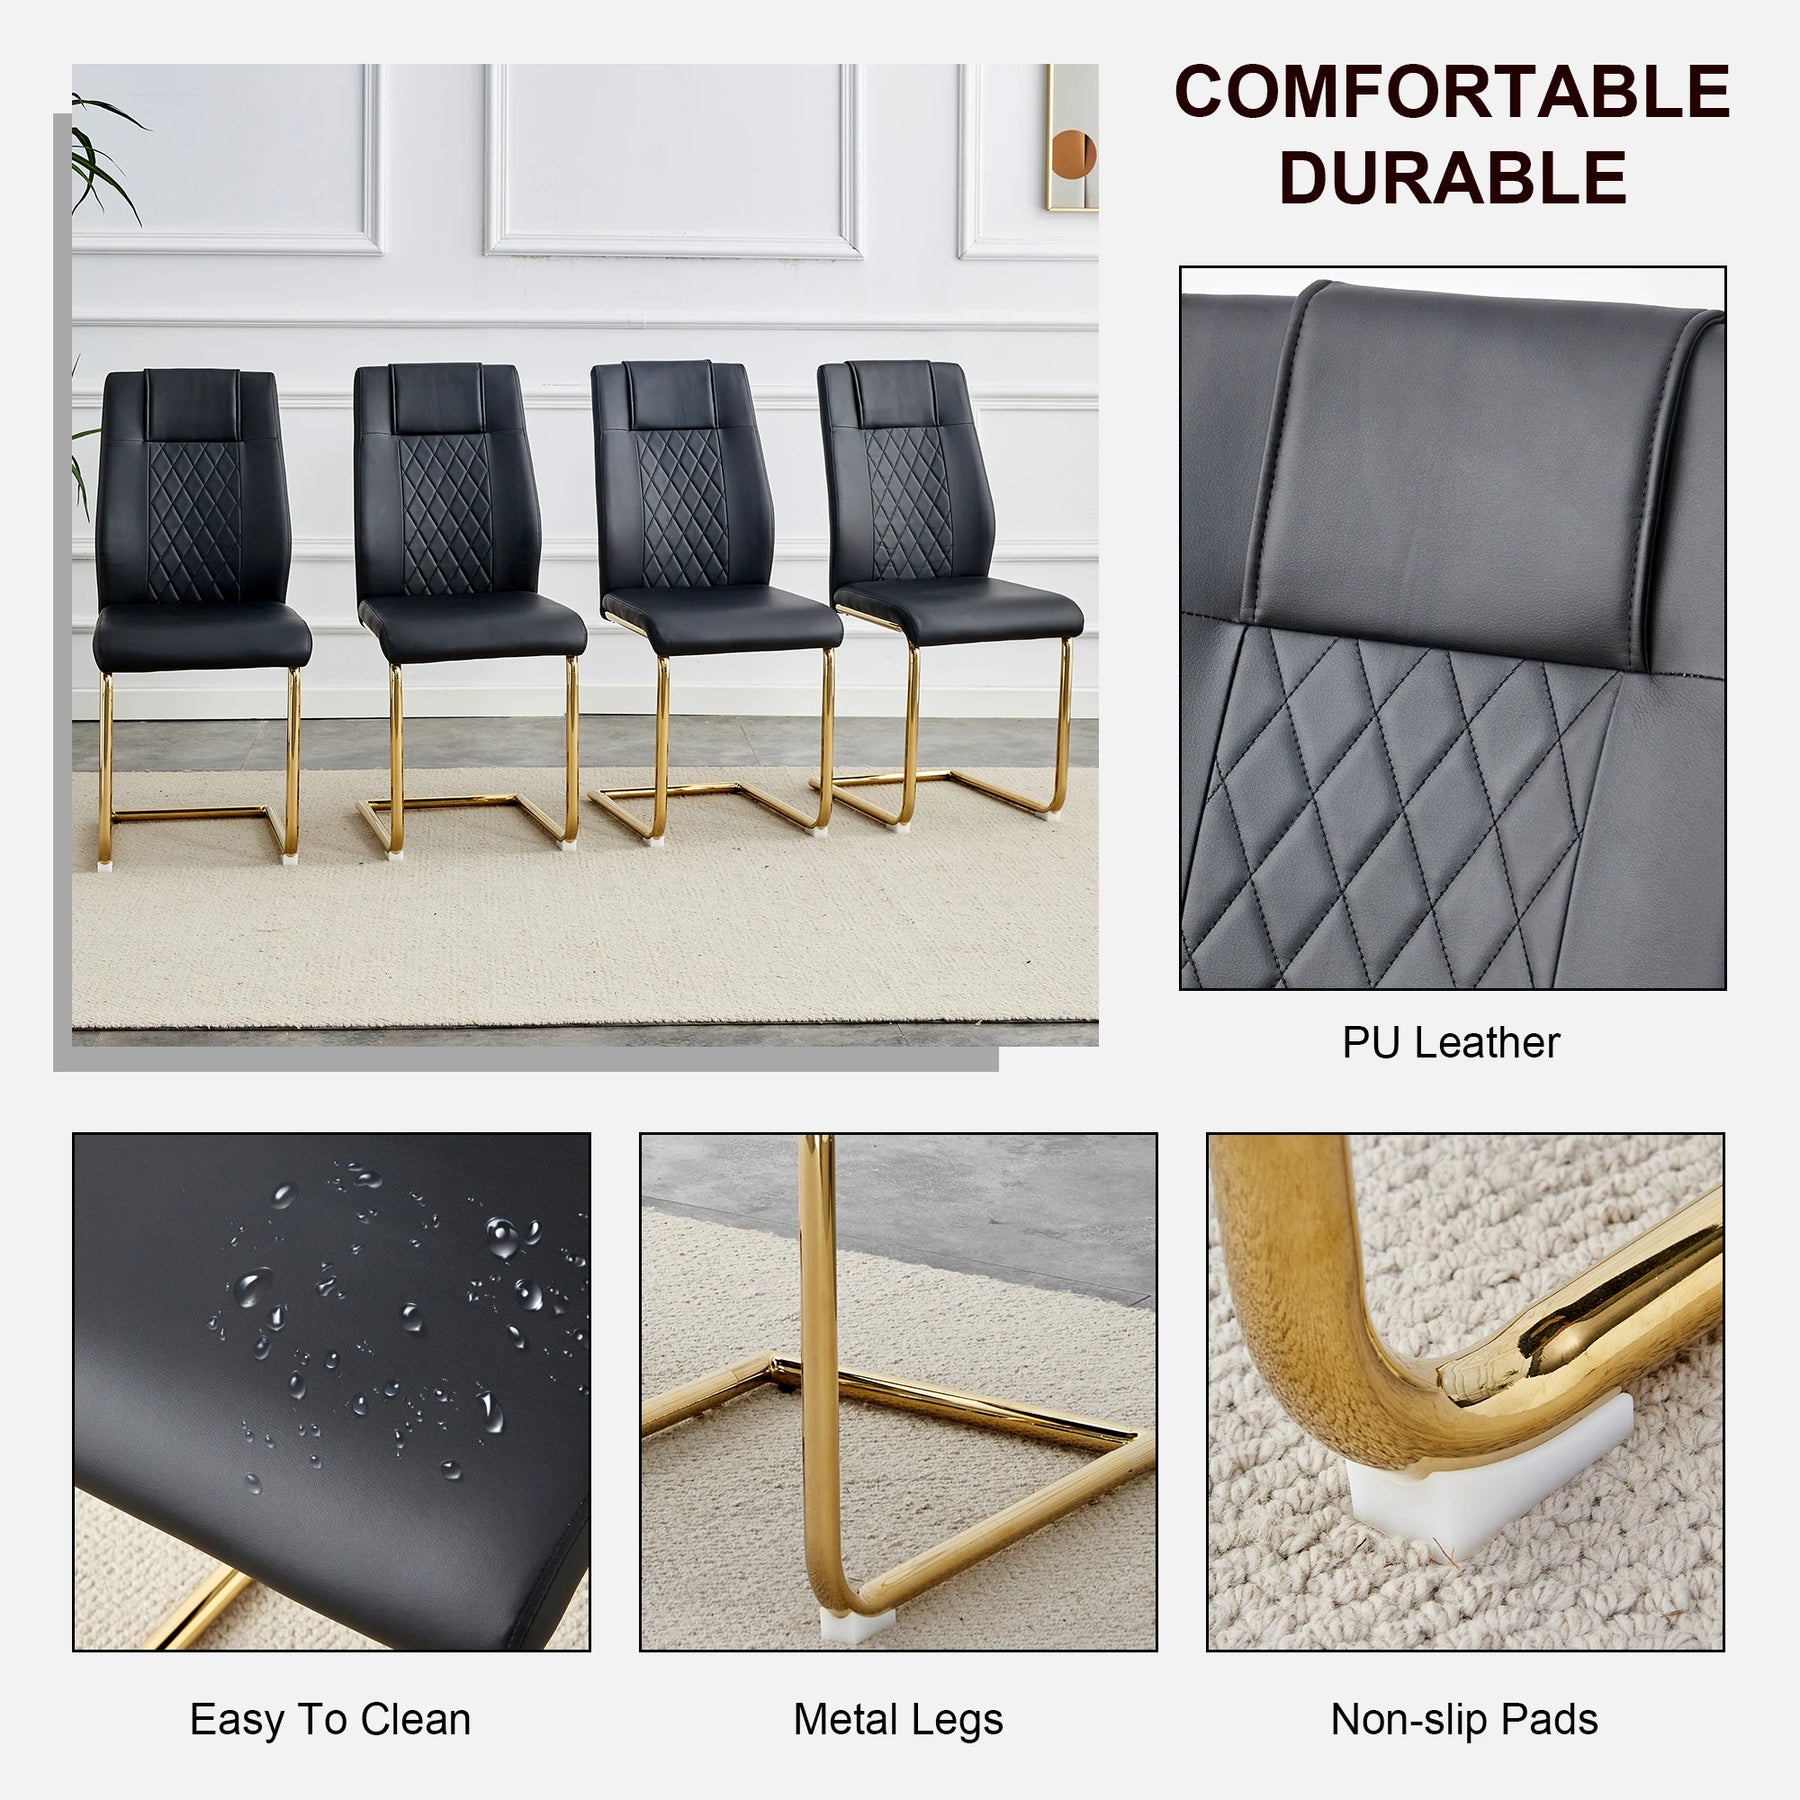 Vorlux Dinehaven - 6 Luxury Nordic Dining Chair Set